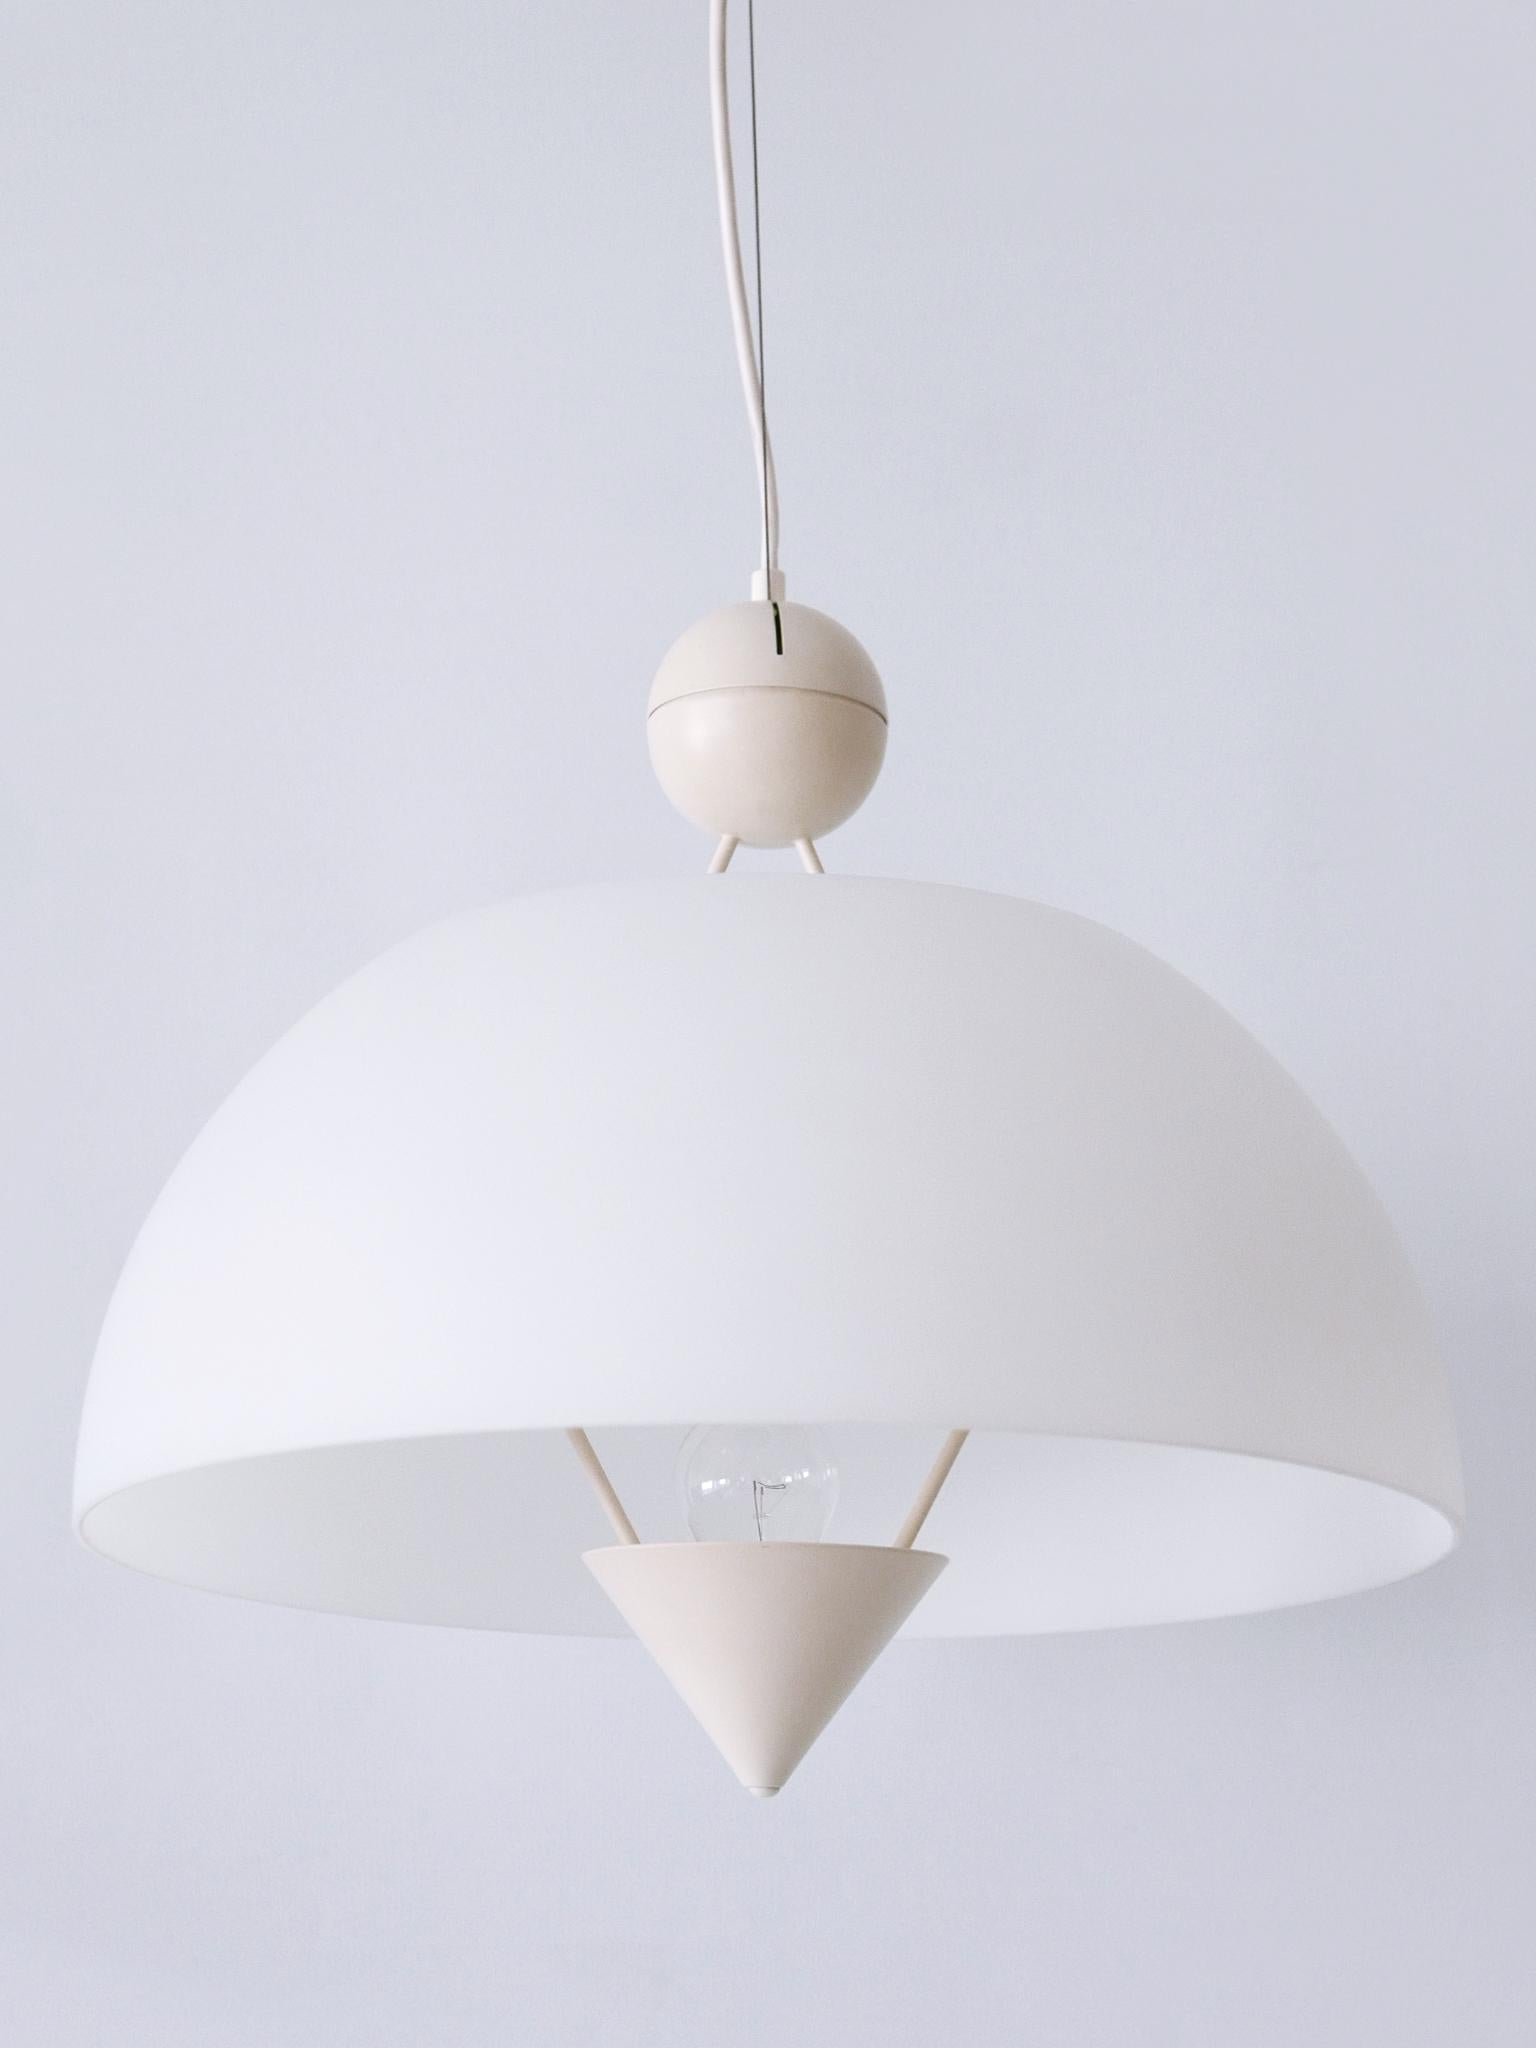 Rare & Elegant Mid-Century Modern Pendant Lamp or Hanging Light Italy 1970s For Sale 6